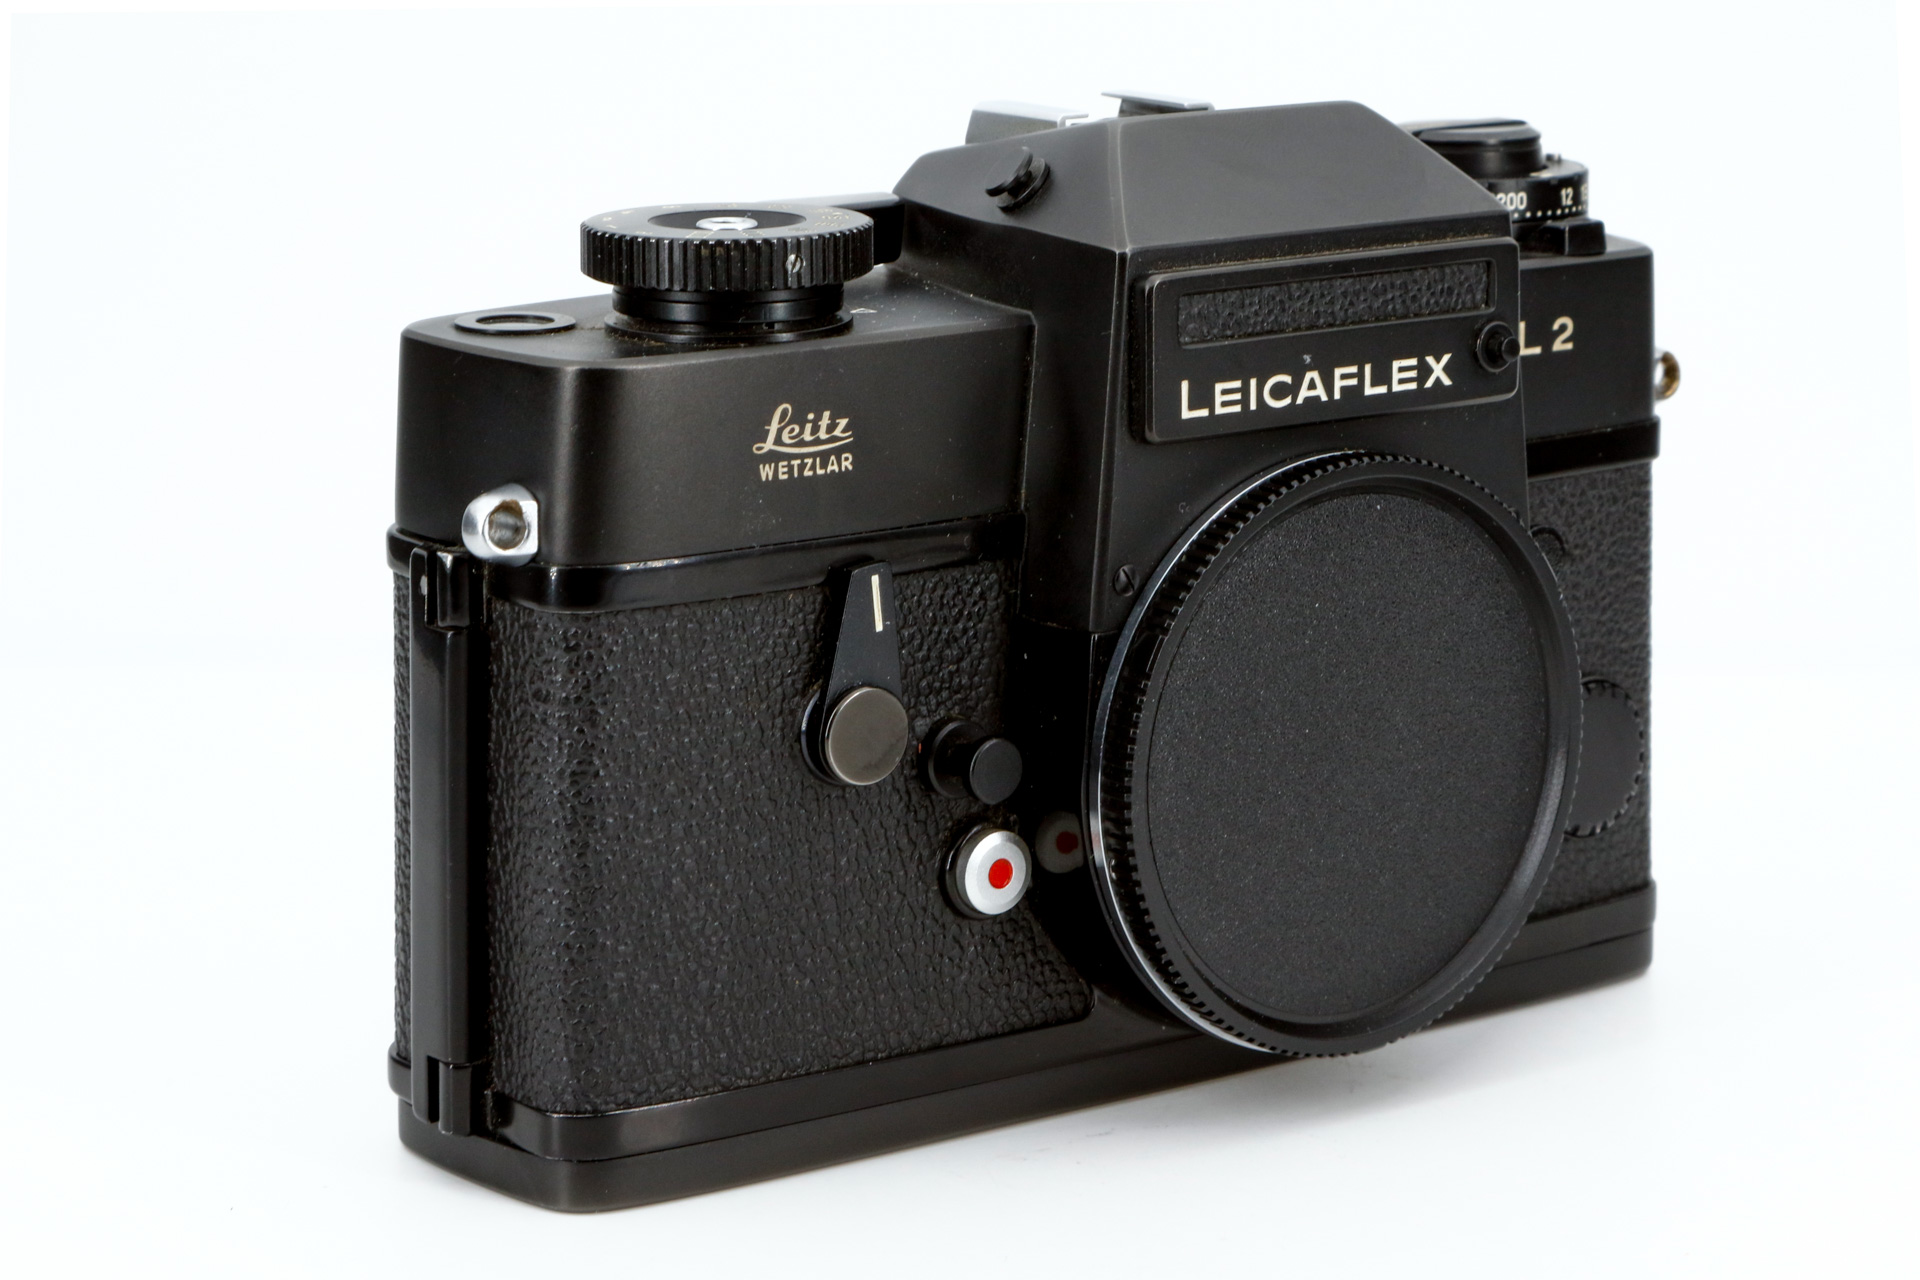 LEICA Leicaflex SL2 black chrome plated